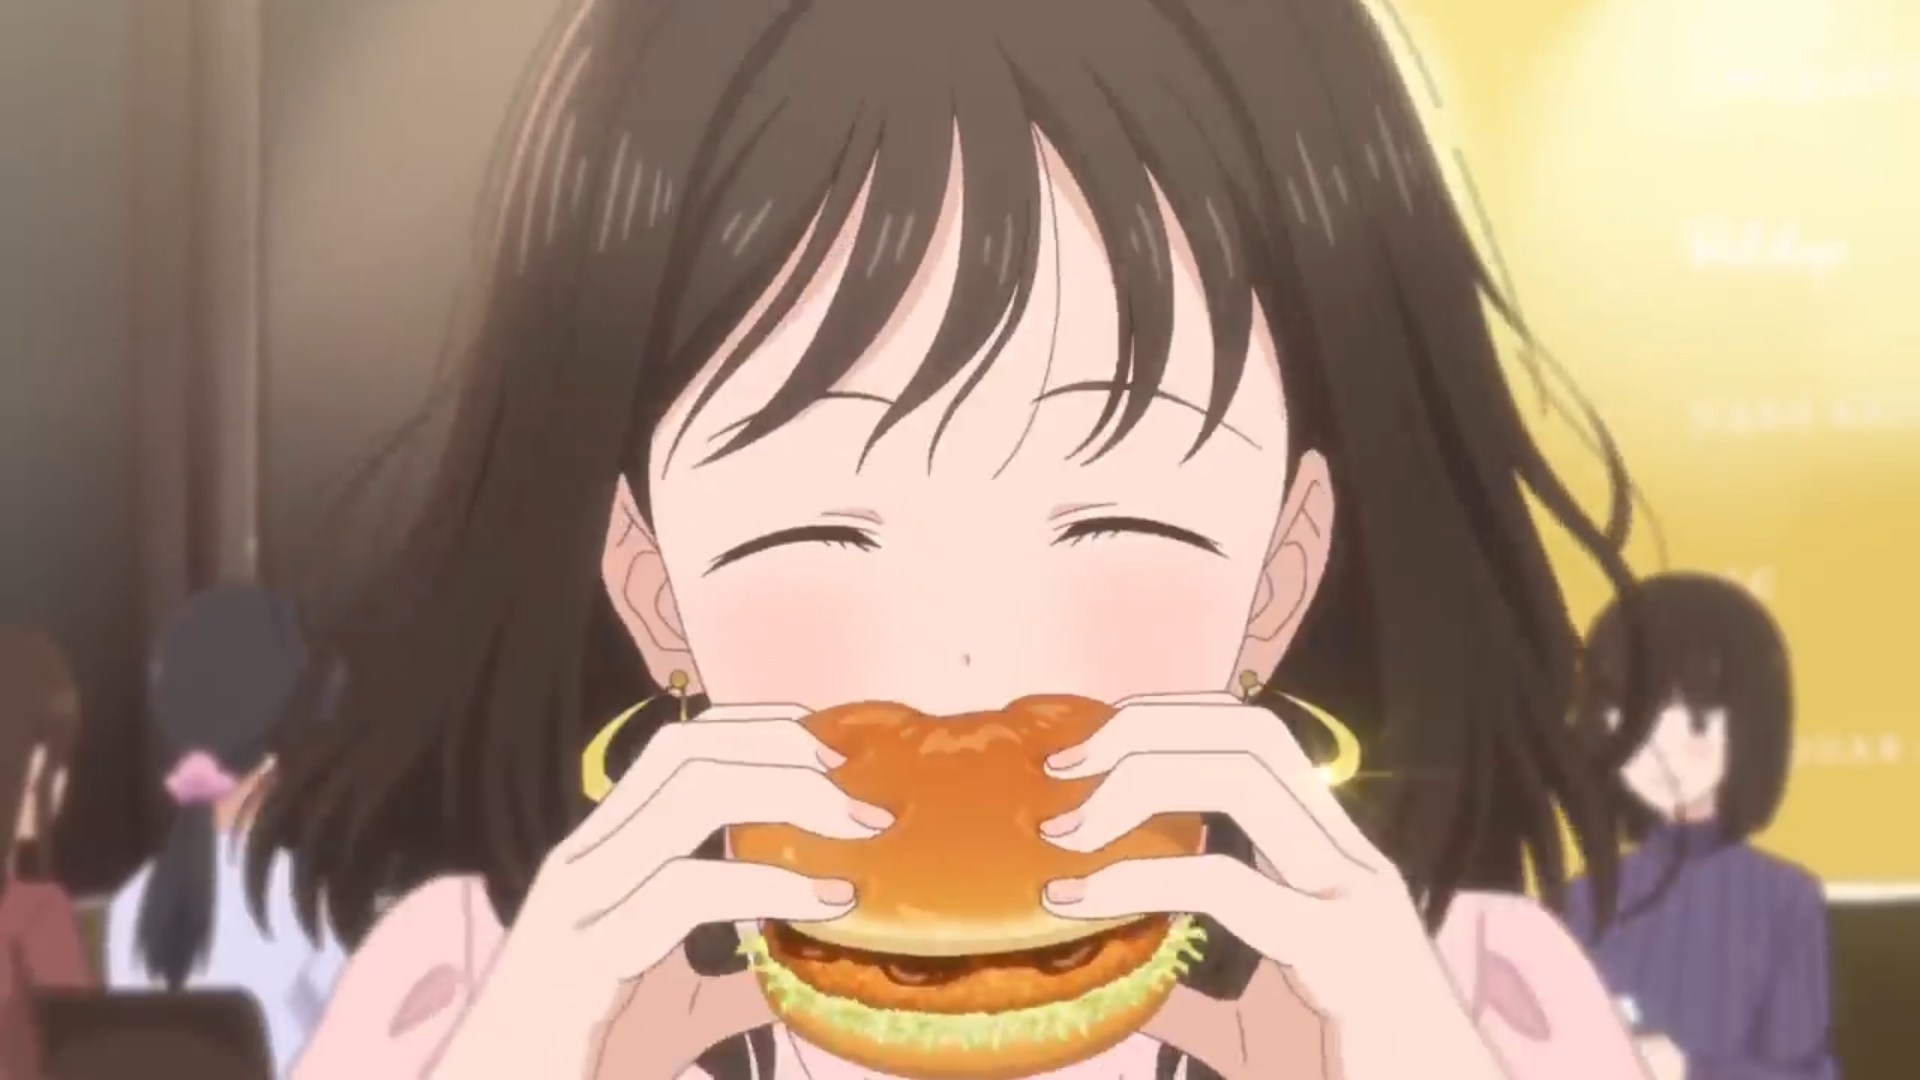 McDonald’s Japan lanza un comercial animado | SomosKudasai